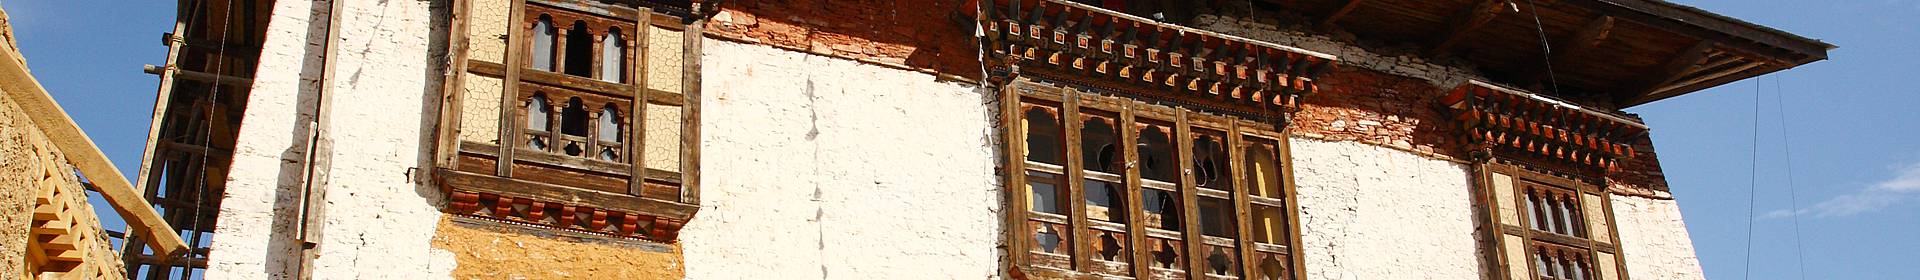 Jele Dzong